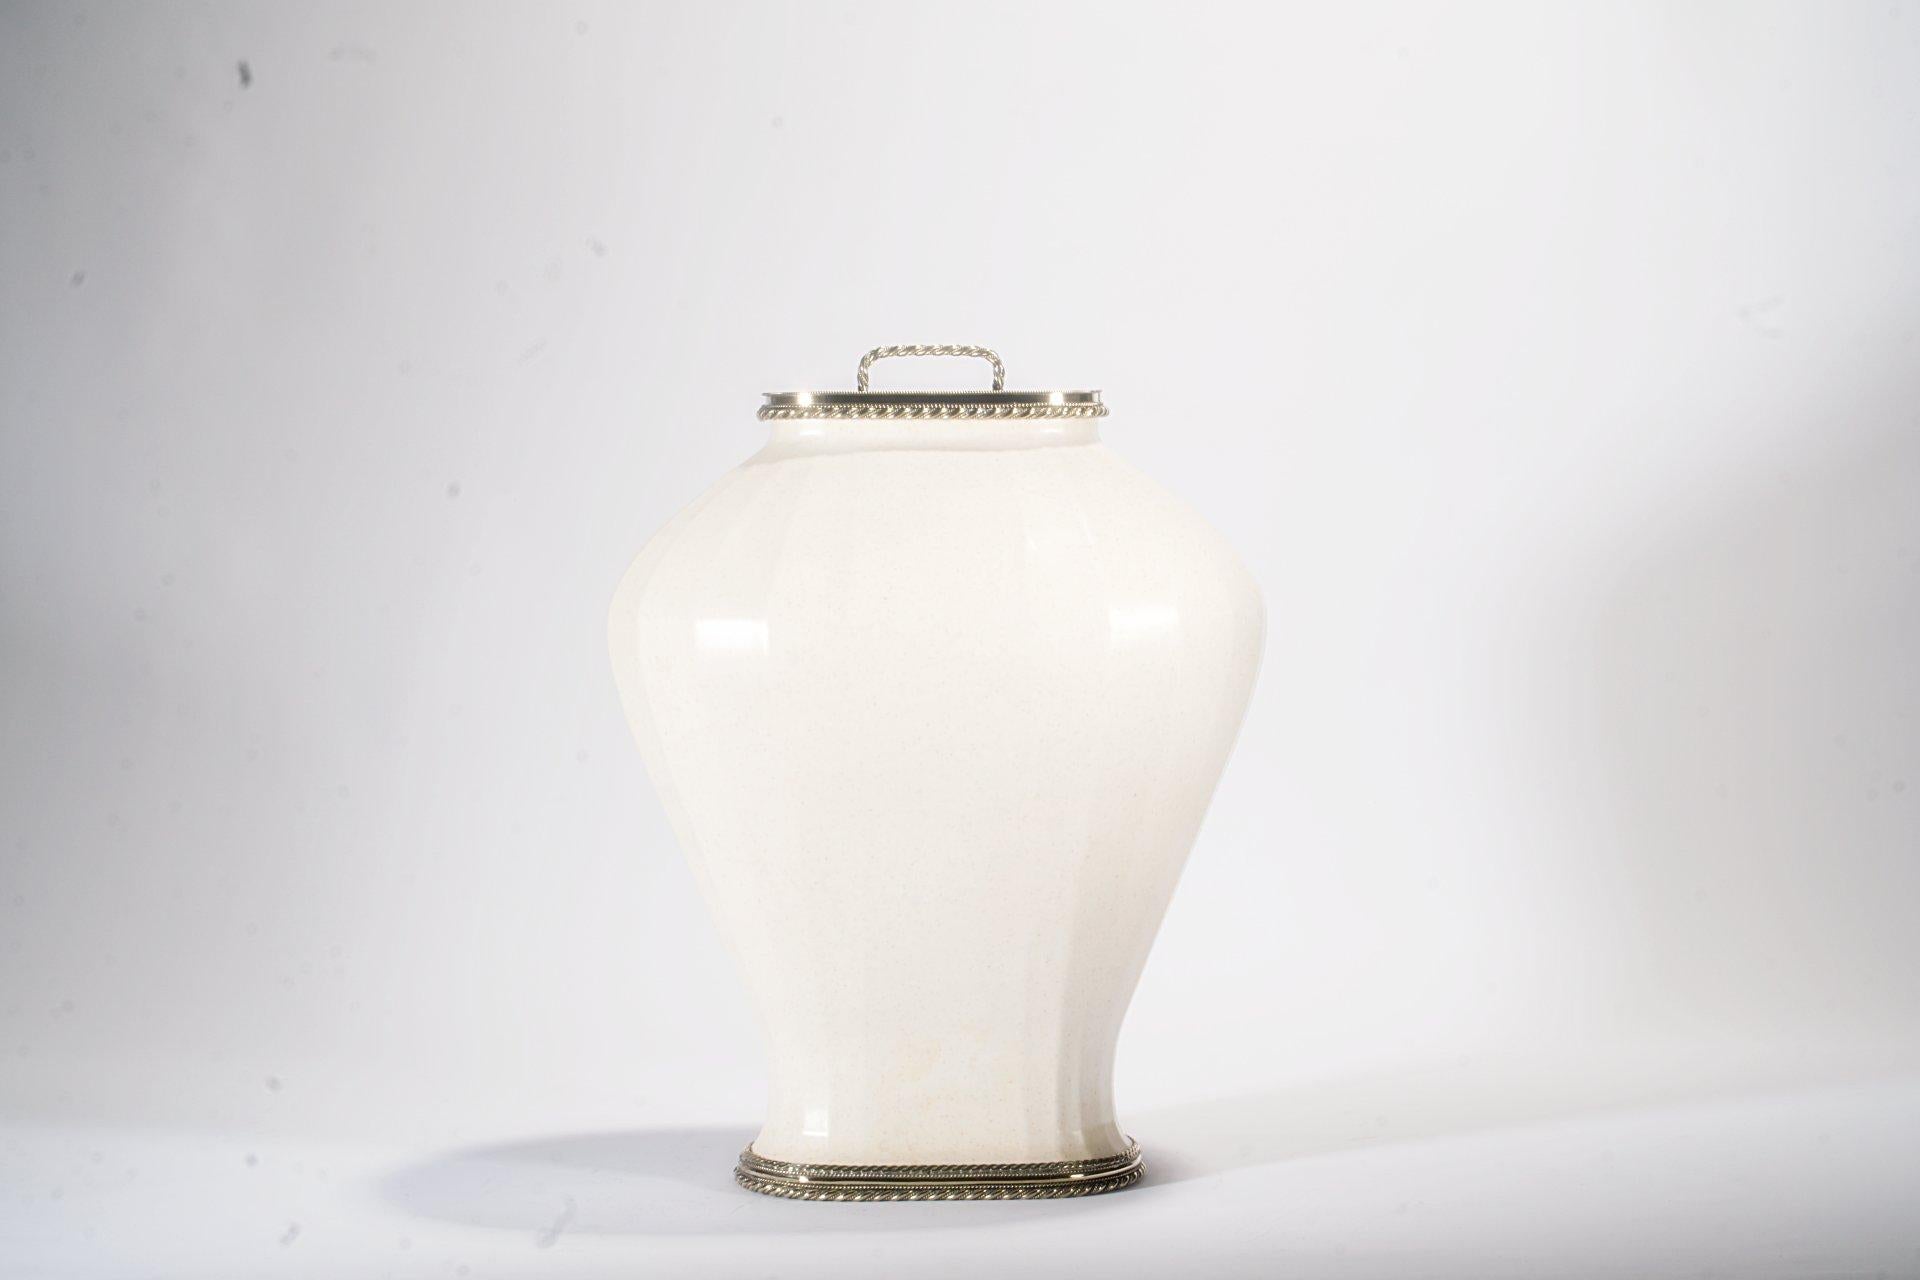 Contemporary Maicena Oval Jar by Estudio Guerrero Made with Glazed Ceramic and White Metal